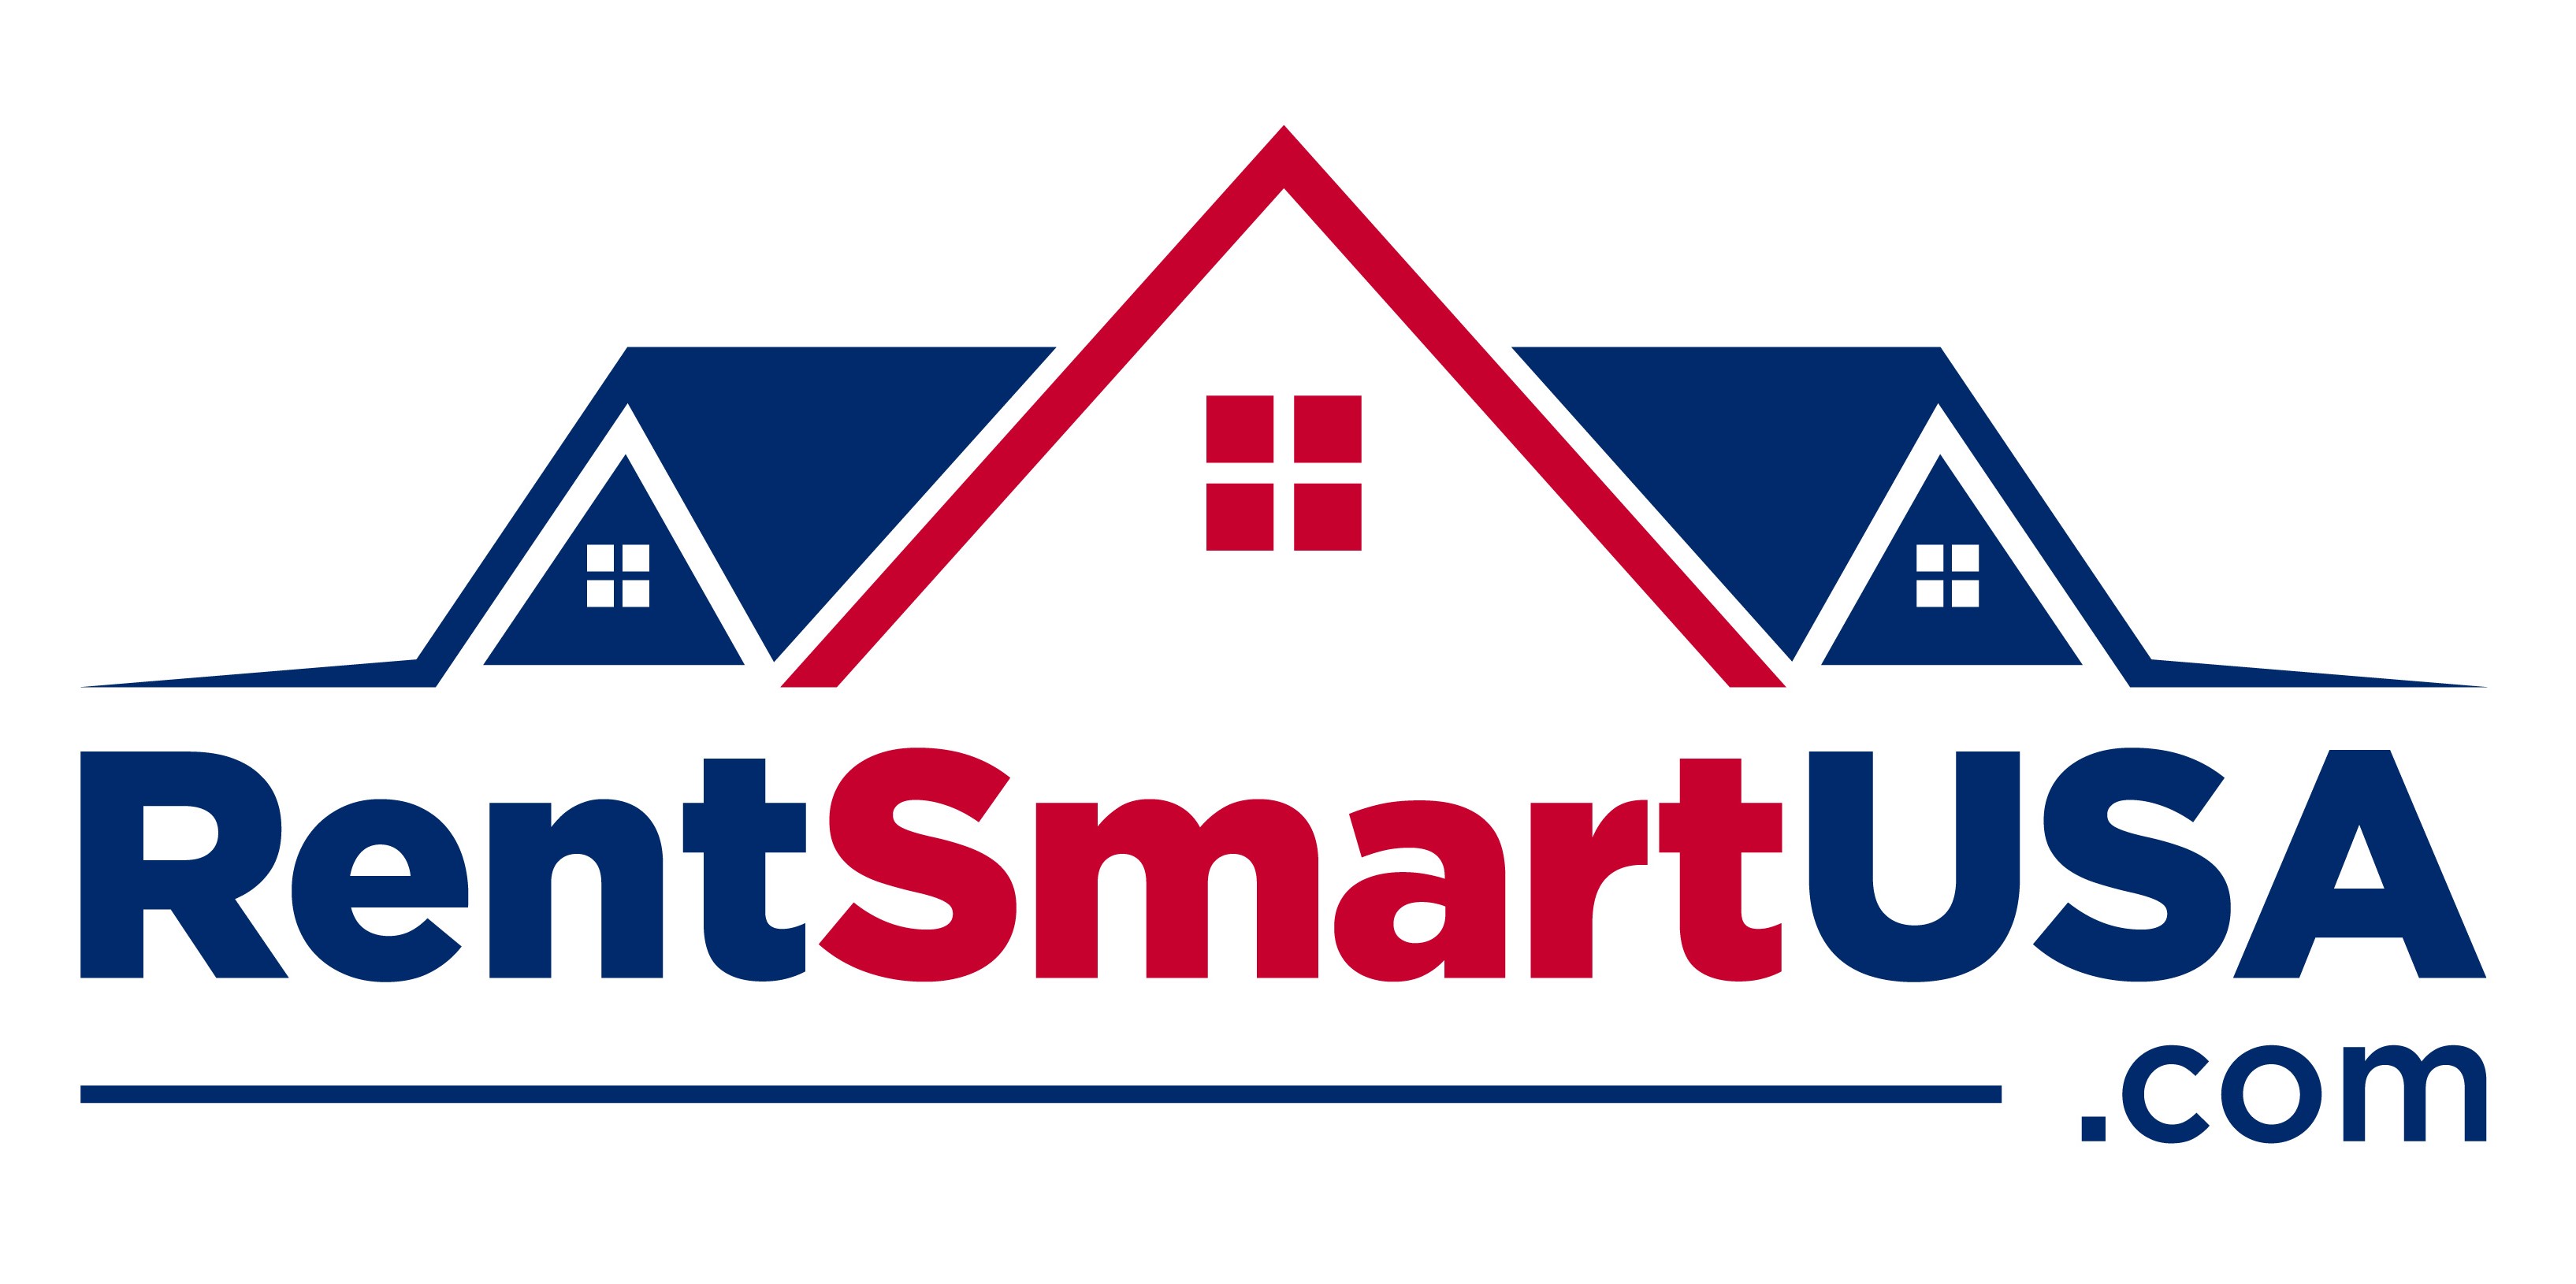 RentSmart USA logo